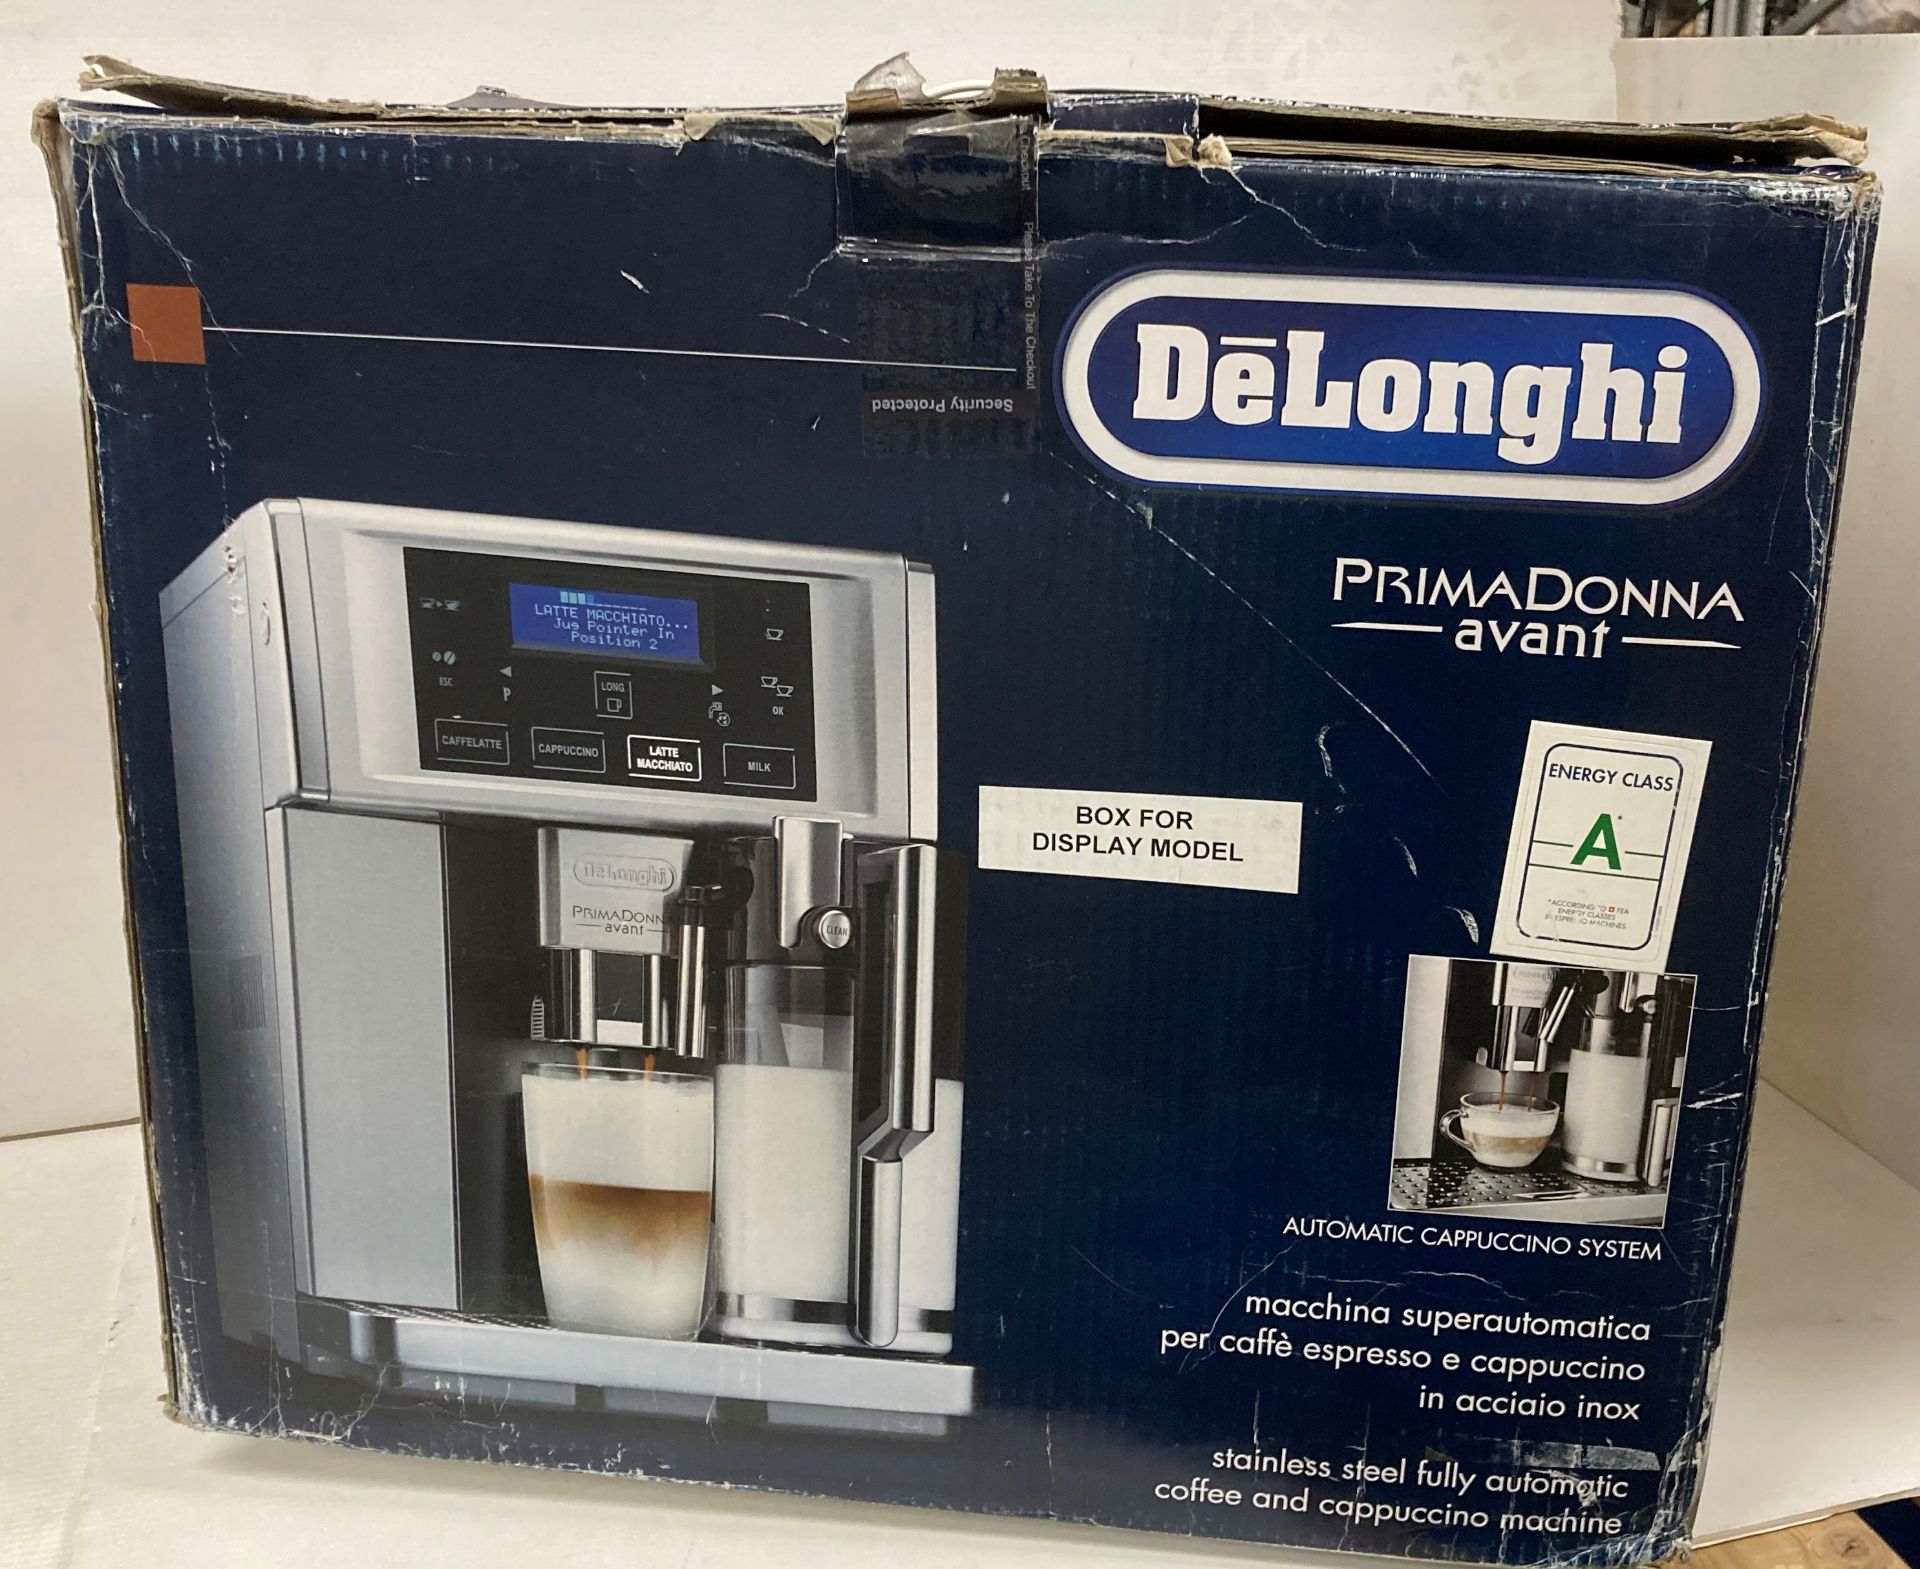 Delonghi Prima Donna Avant automatic cappuccino system (saleroom location: K13) Further